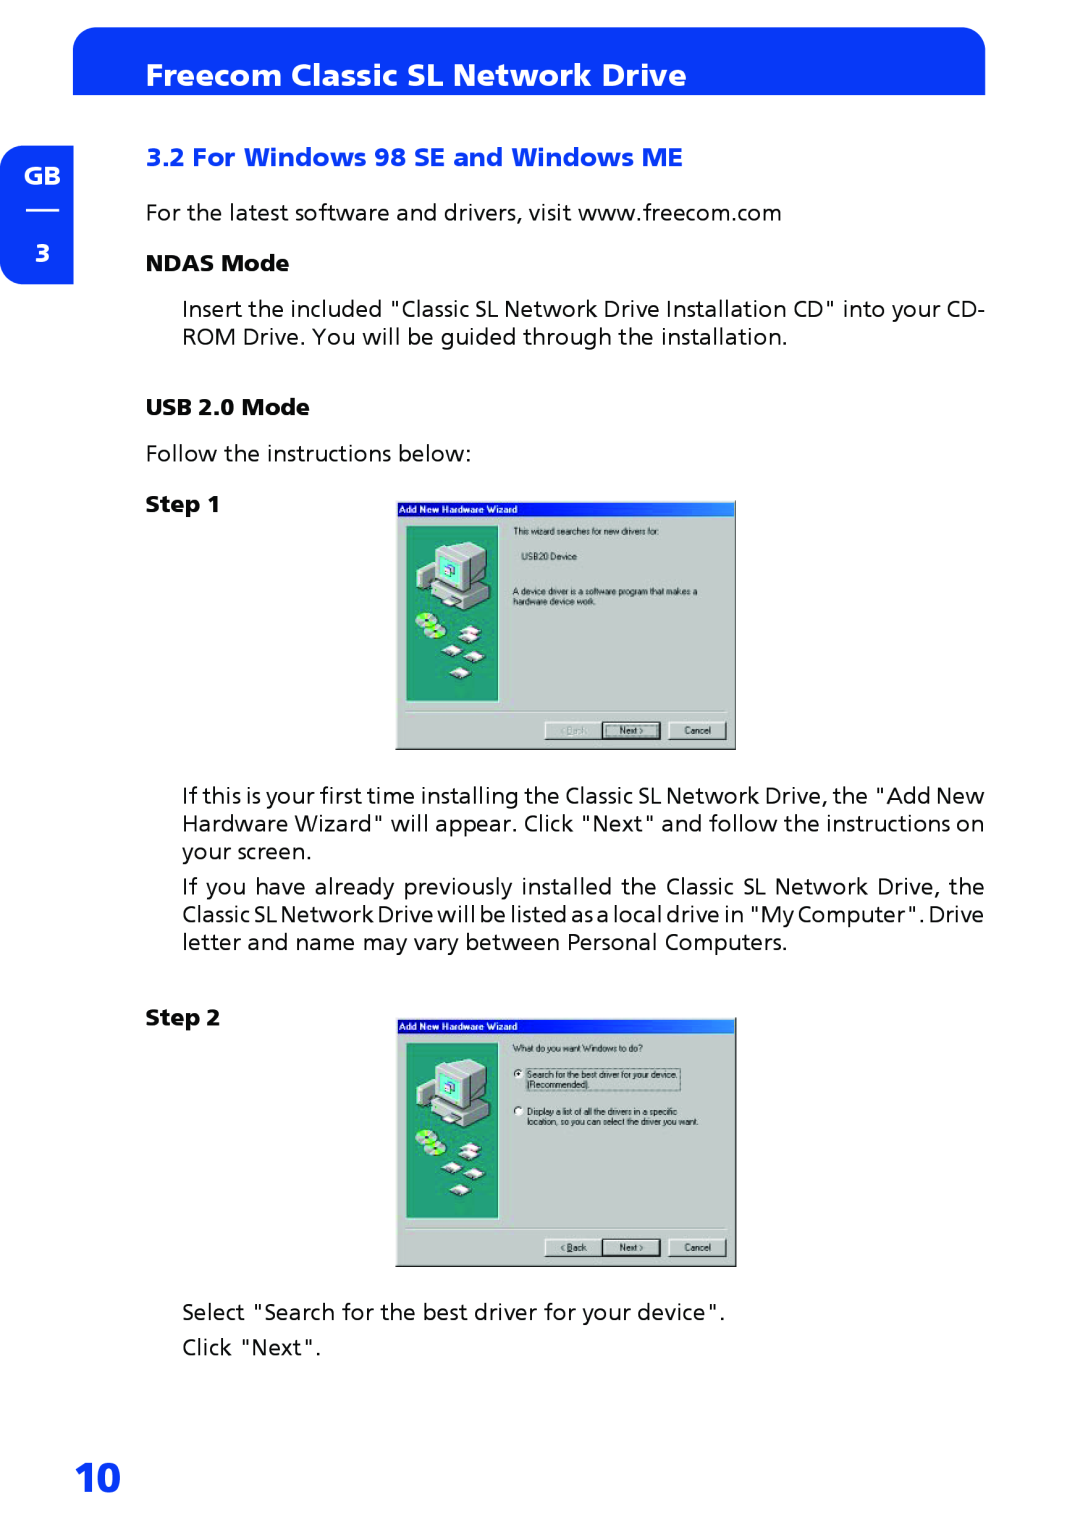 Freecom Technologies Network hard drive manual Freecom Classic SL Network Drive, For Windows 98 SE and Windows ME 